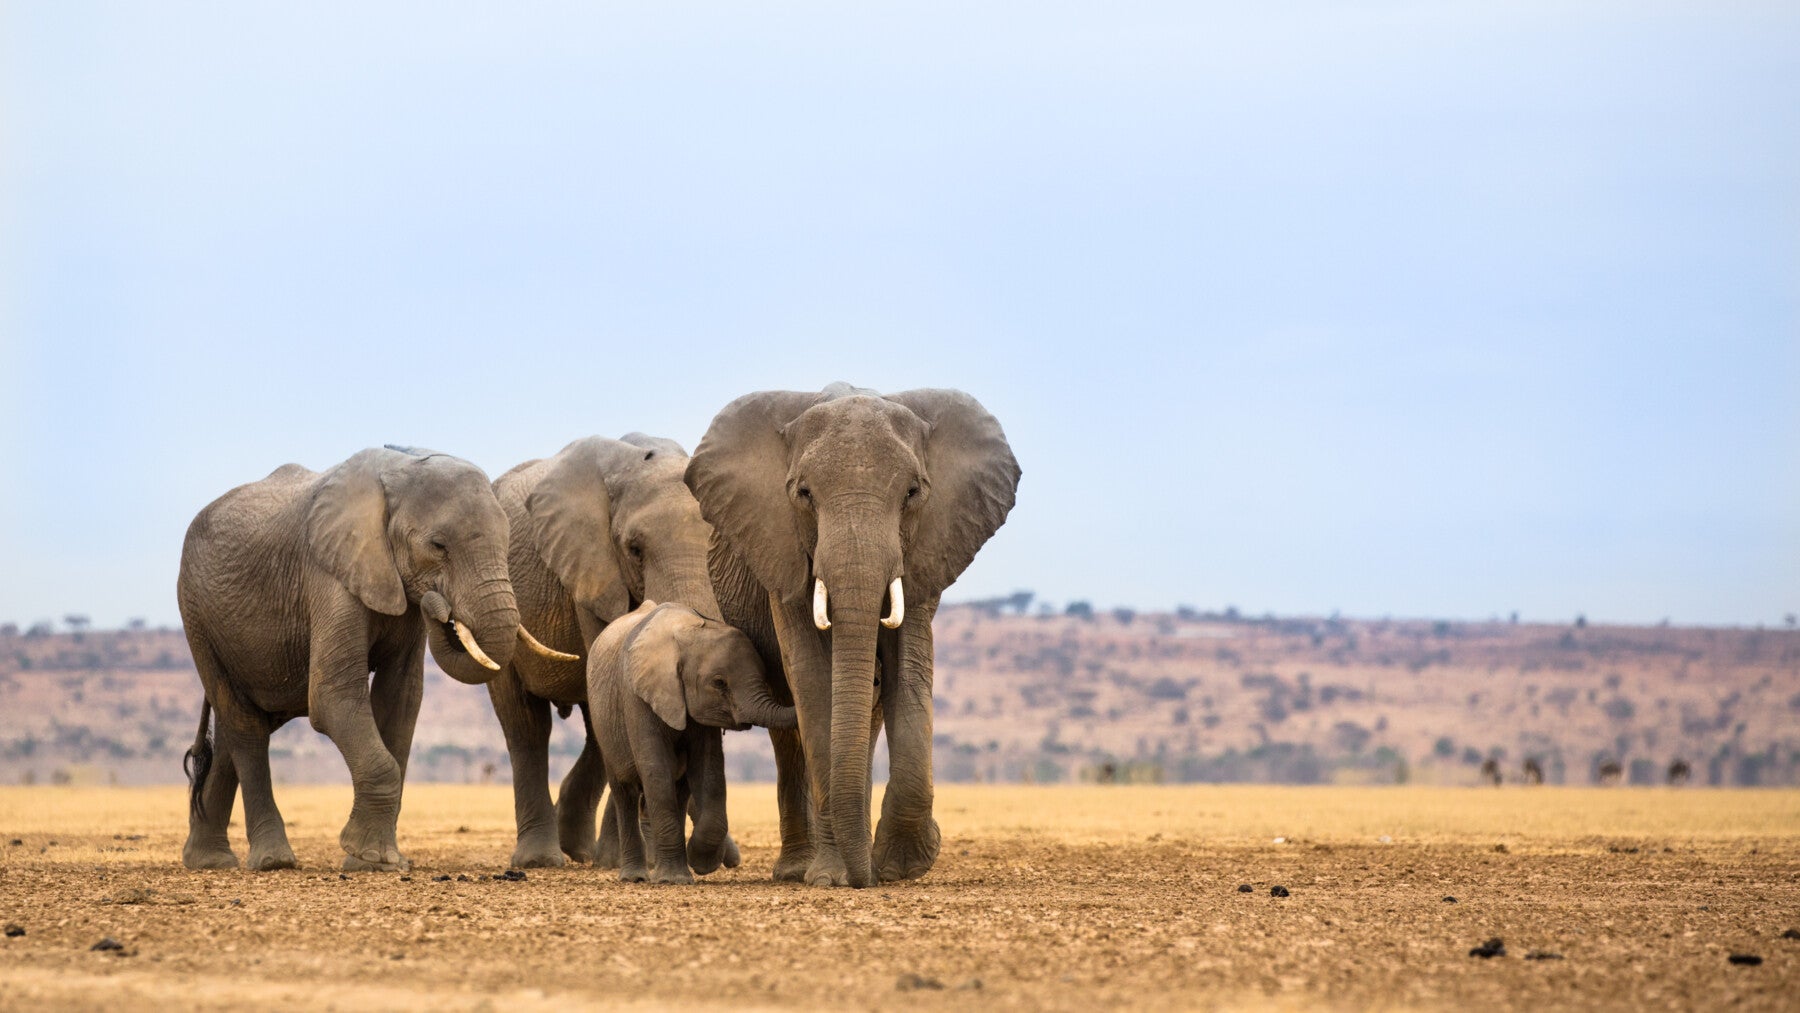 Elephants, by Cathy Smith